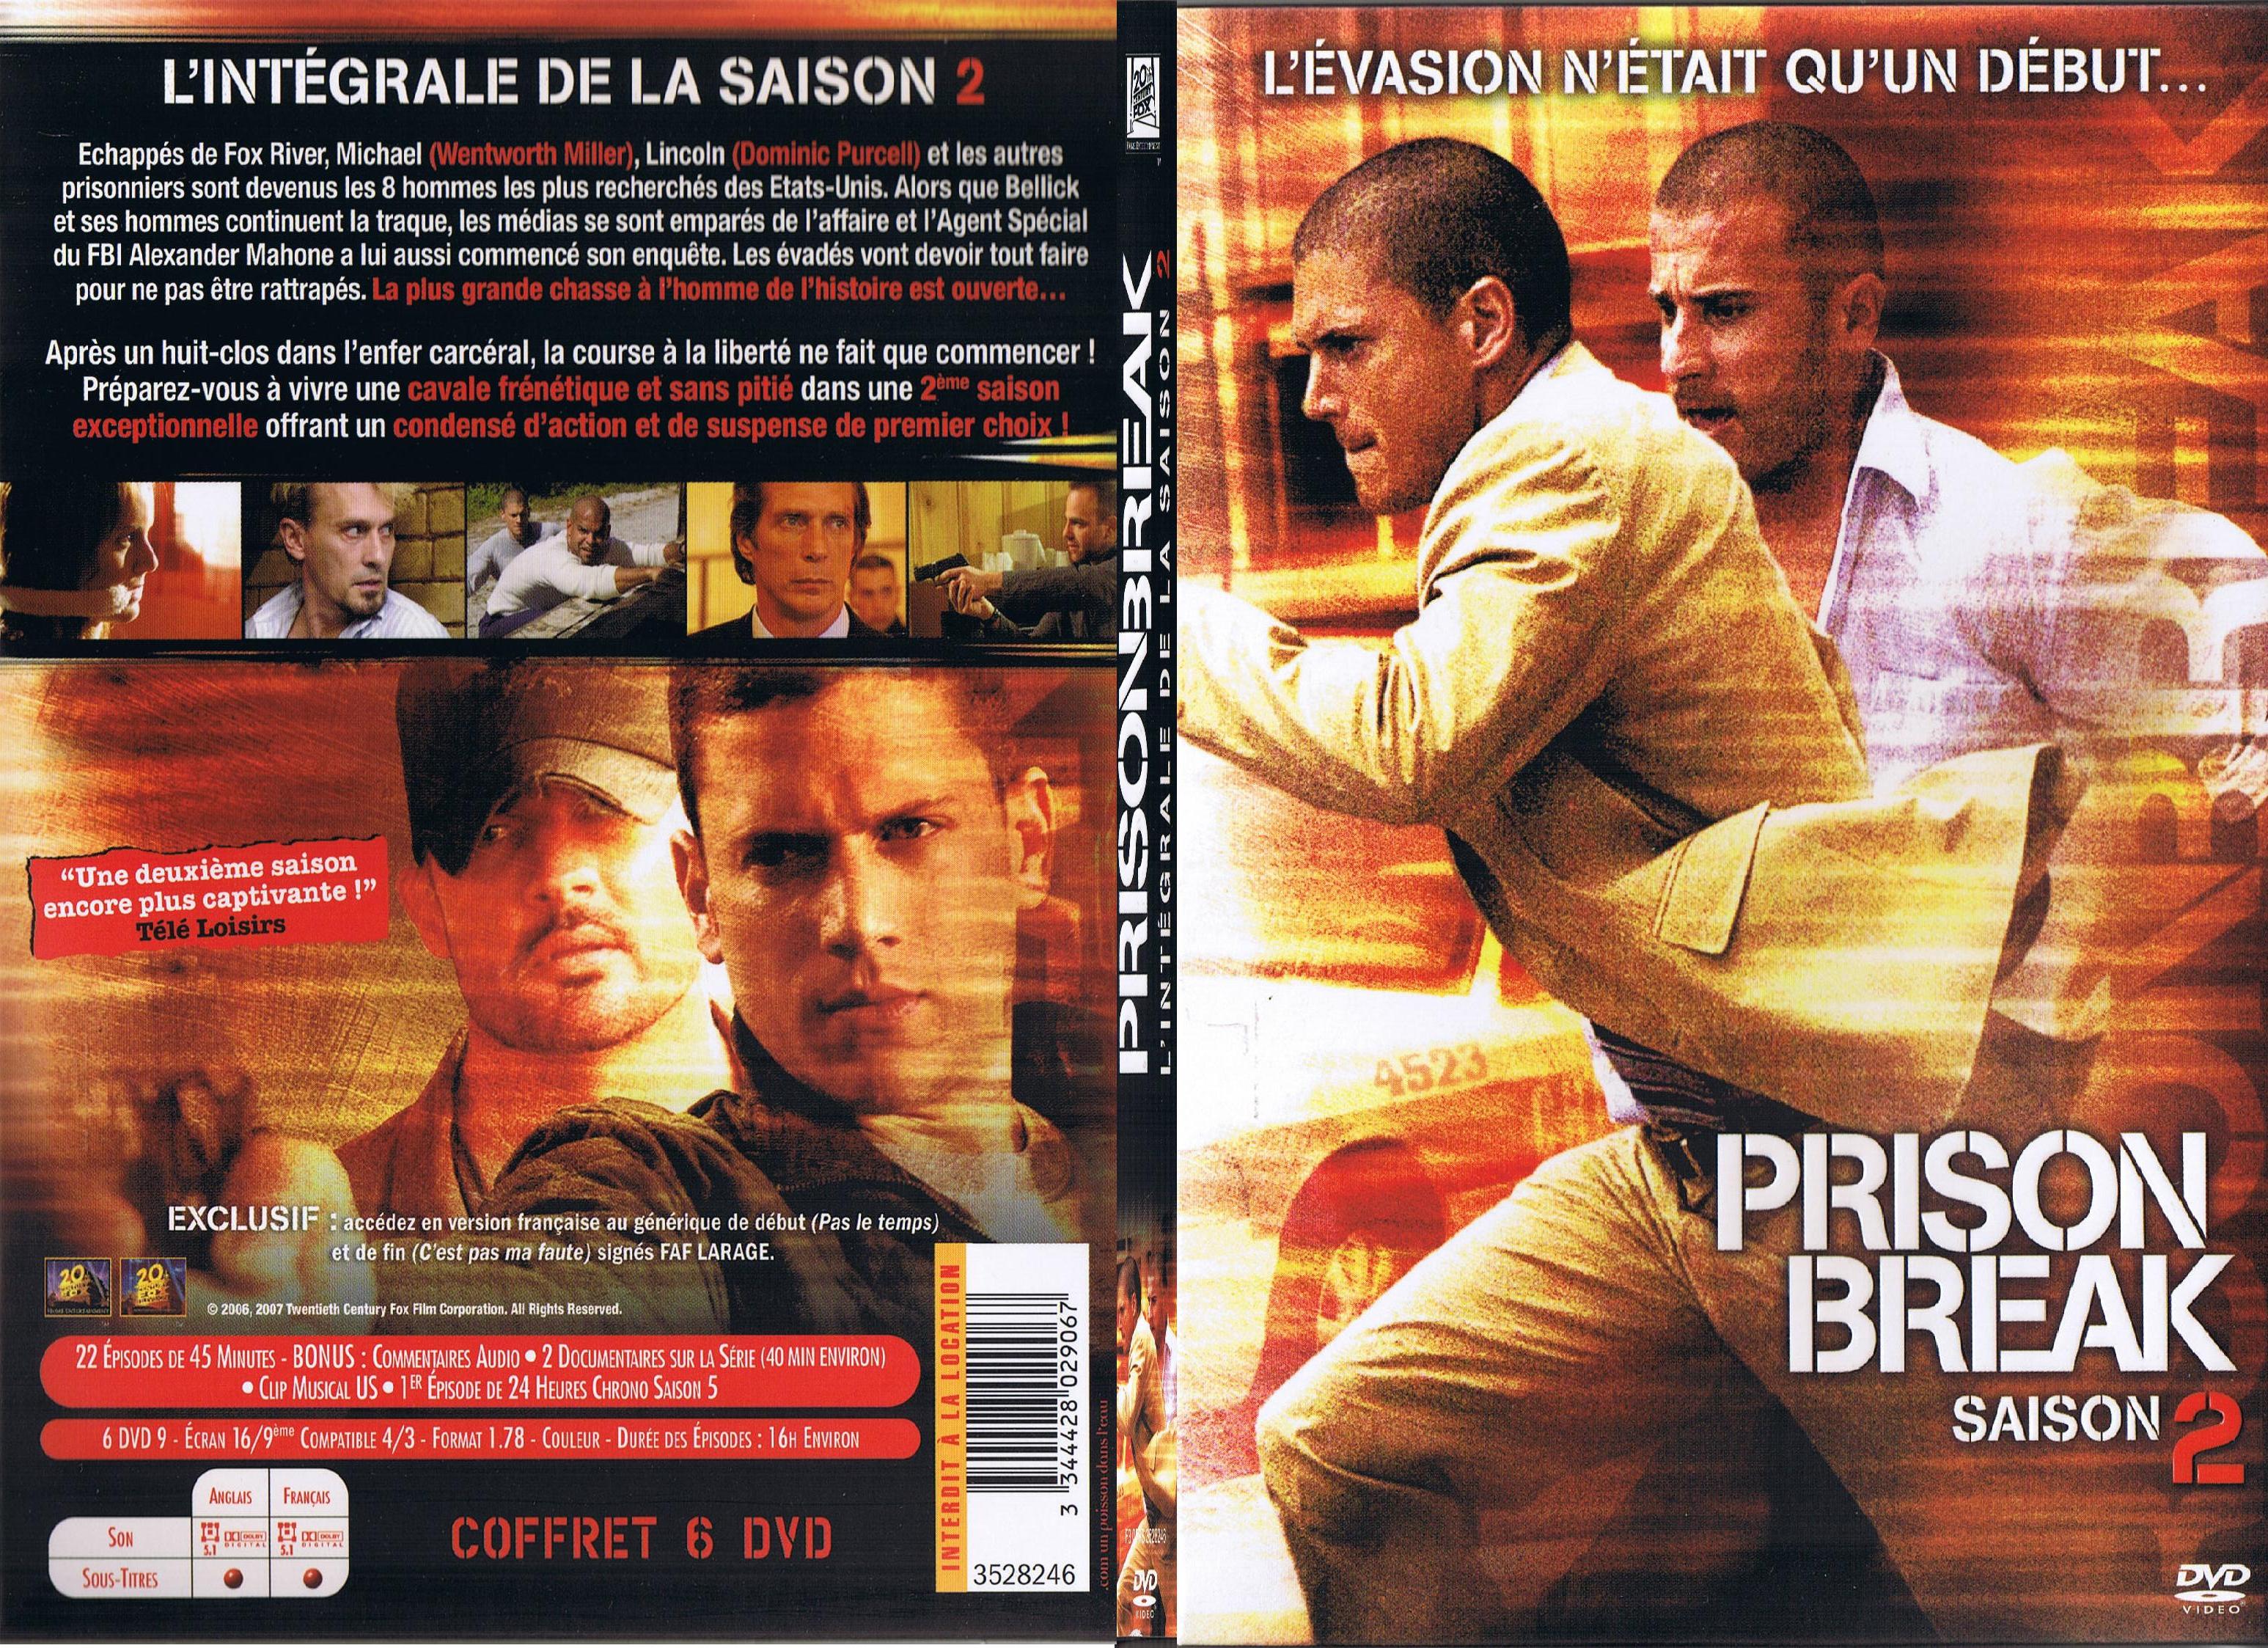 Jaquette DVD Prison break saison 2 - SLIM